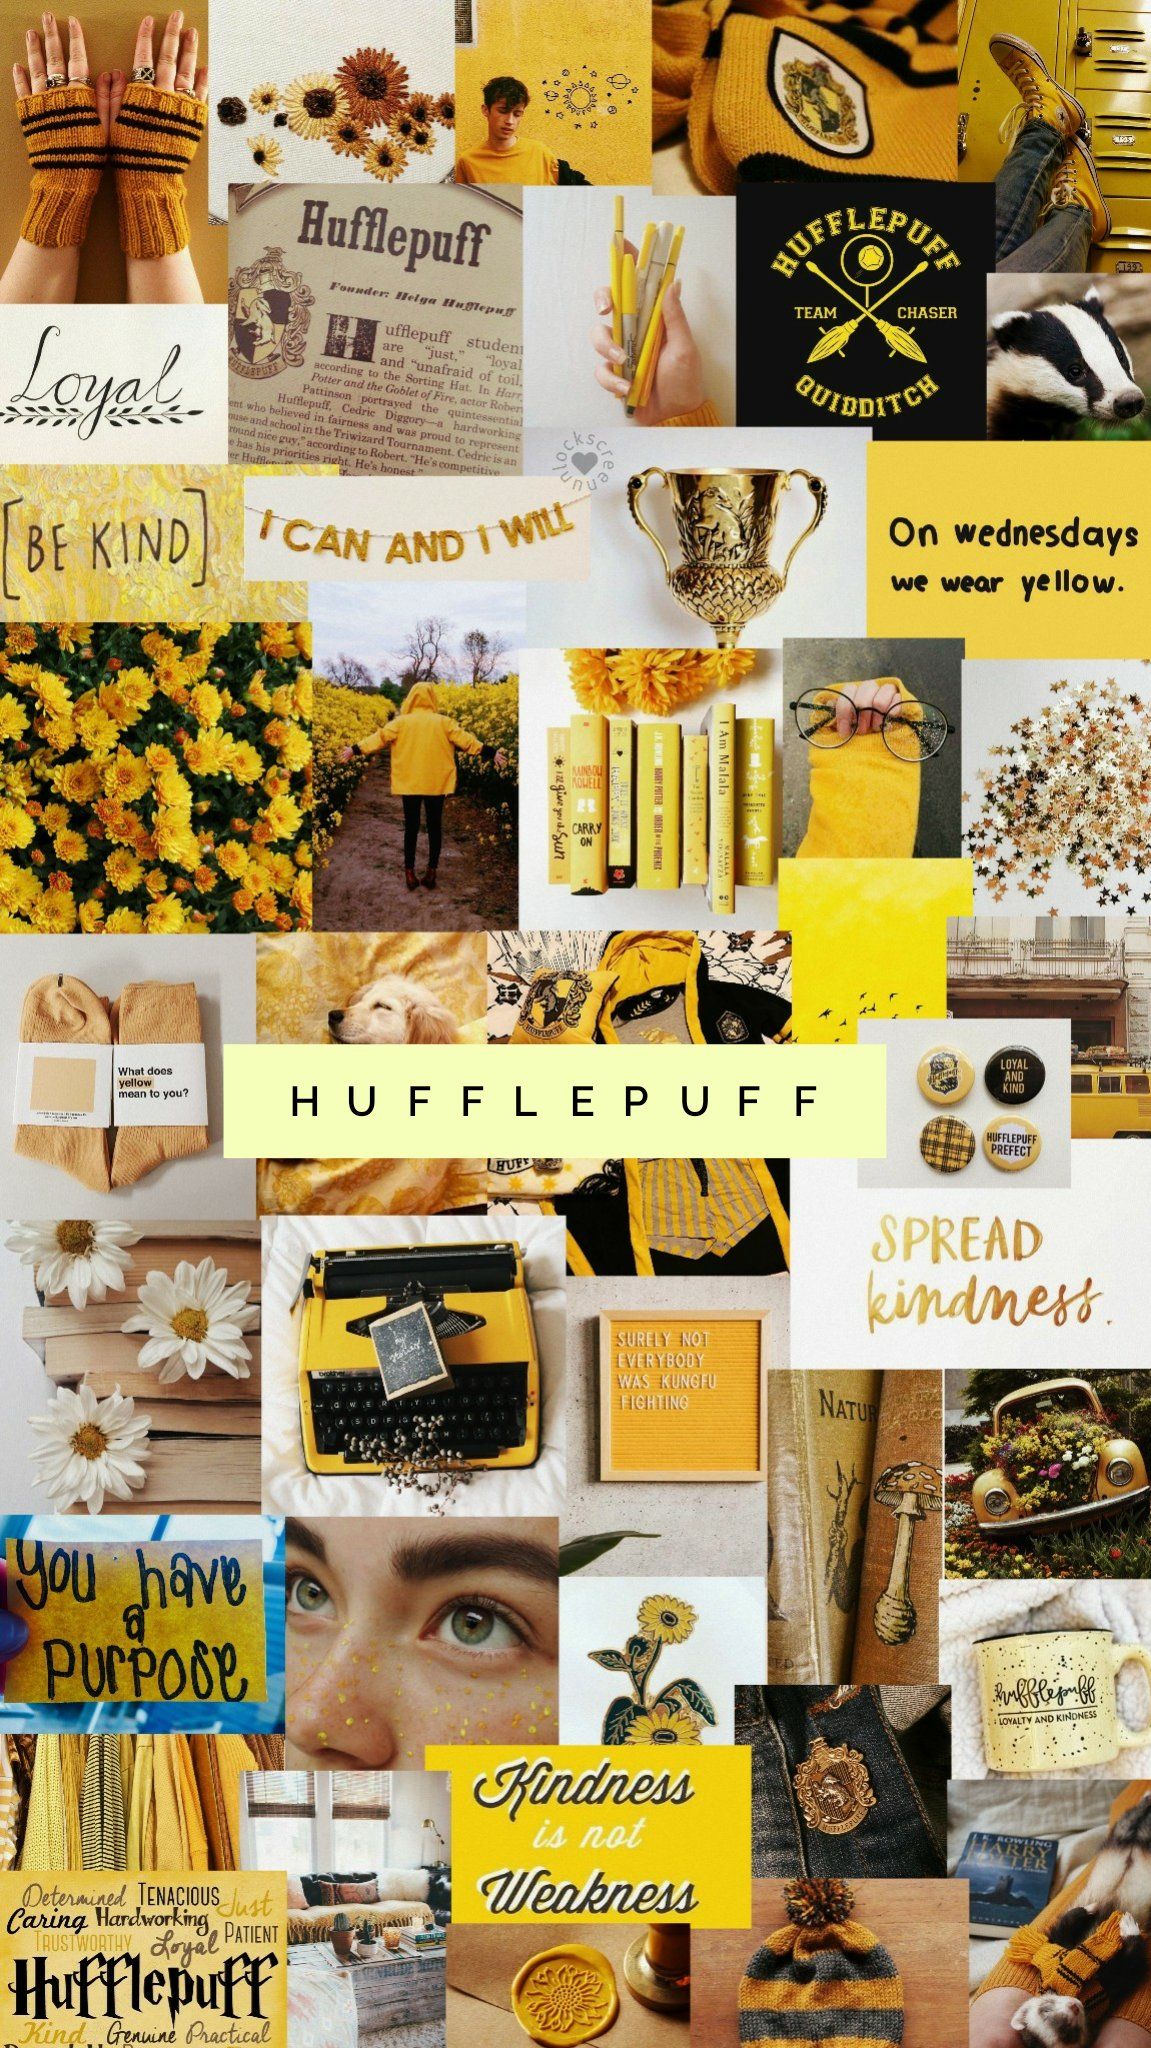 Aesthetic Hufflepuff wallpaper for your phone or desktop! - Hufflepuff